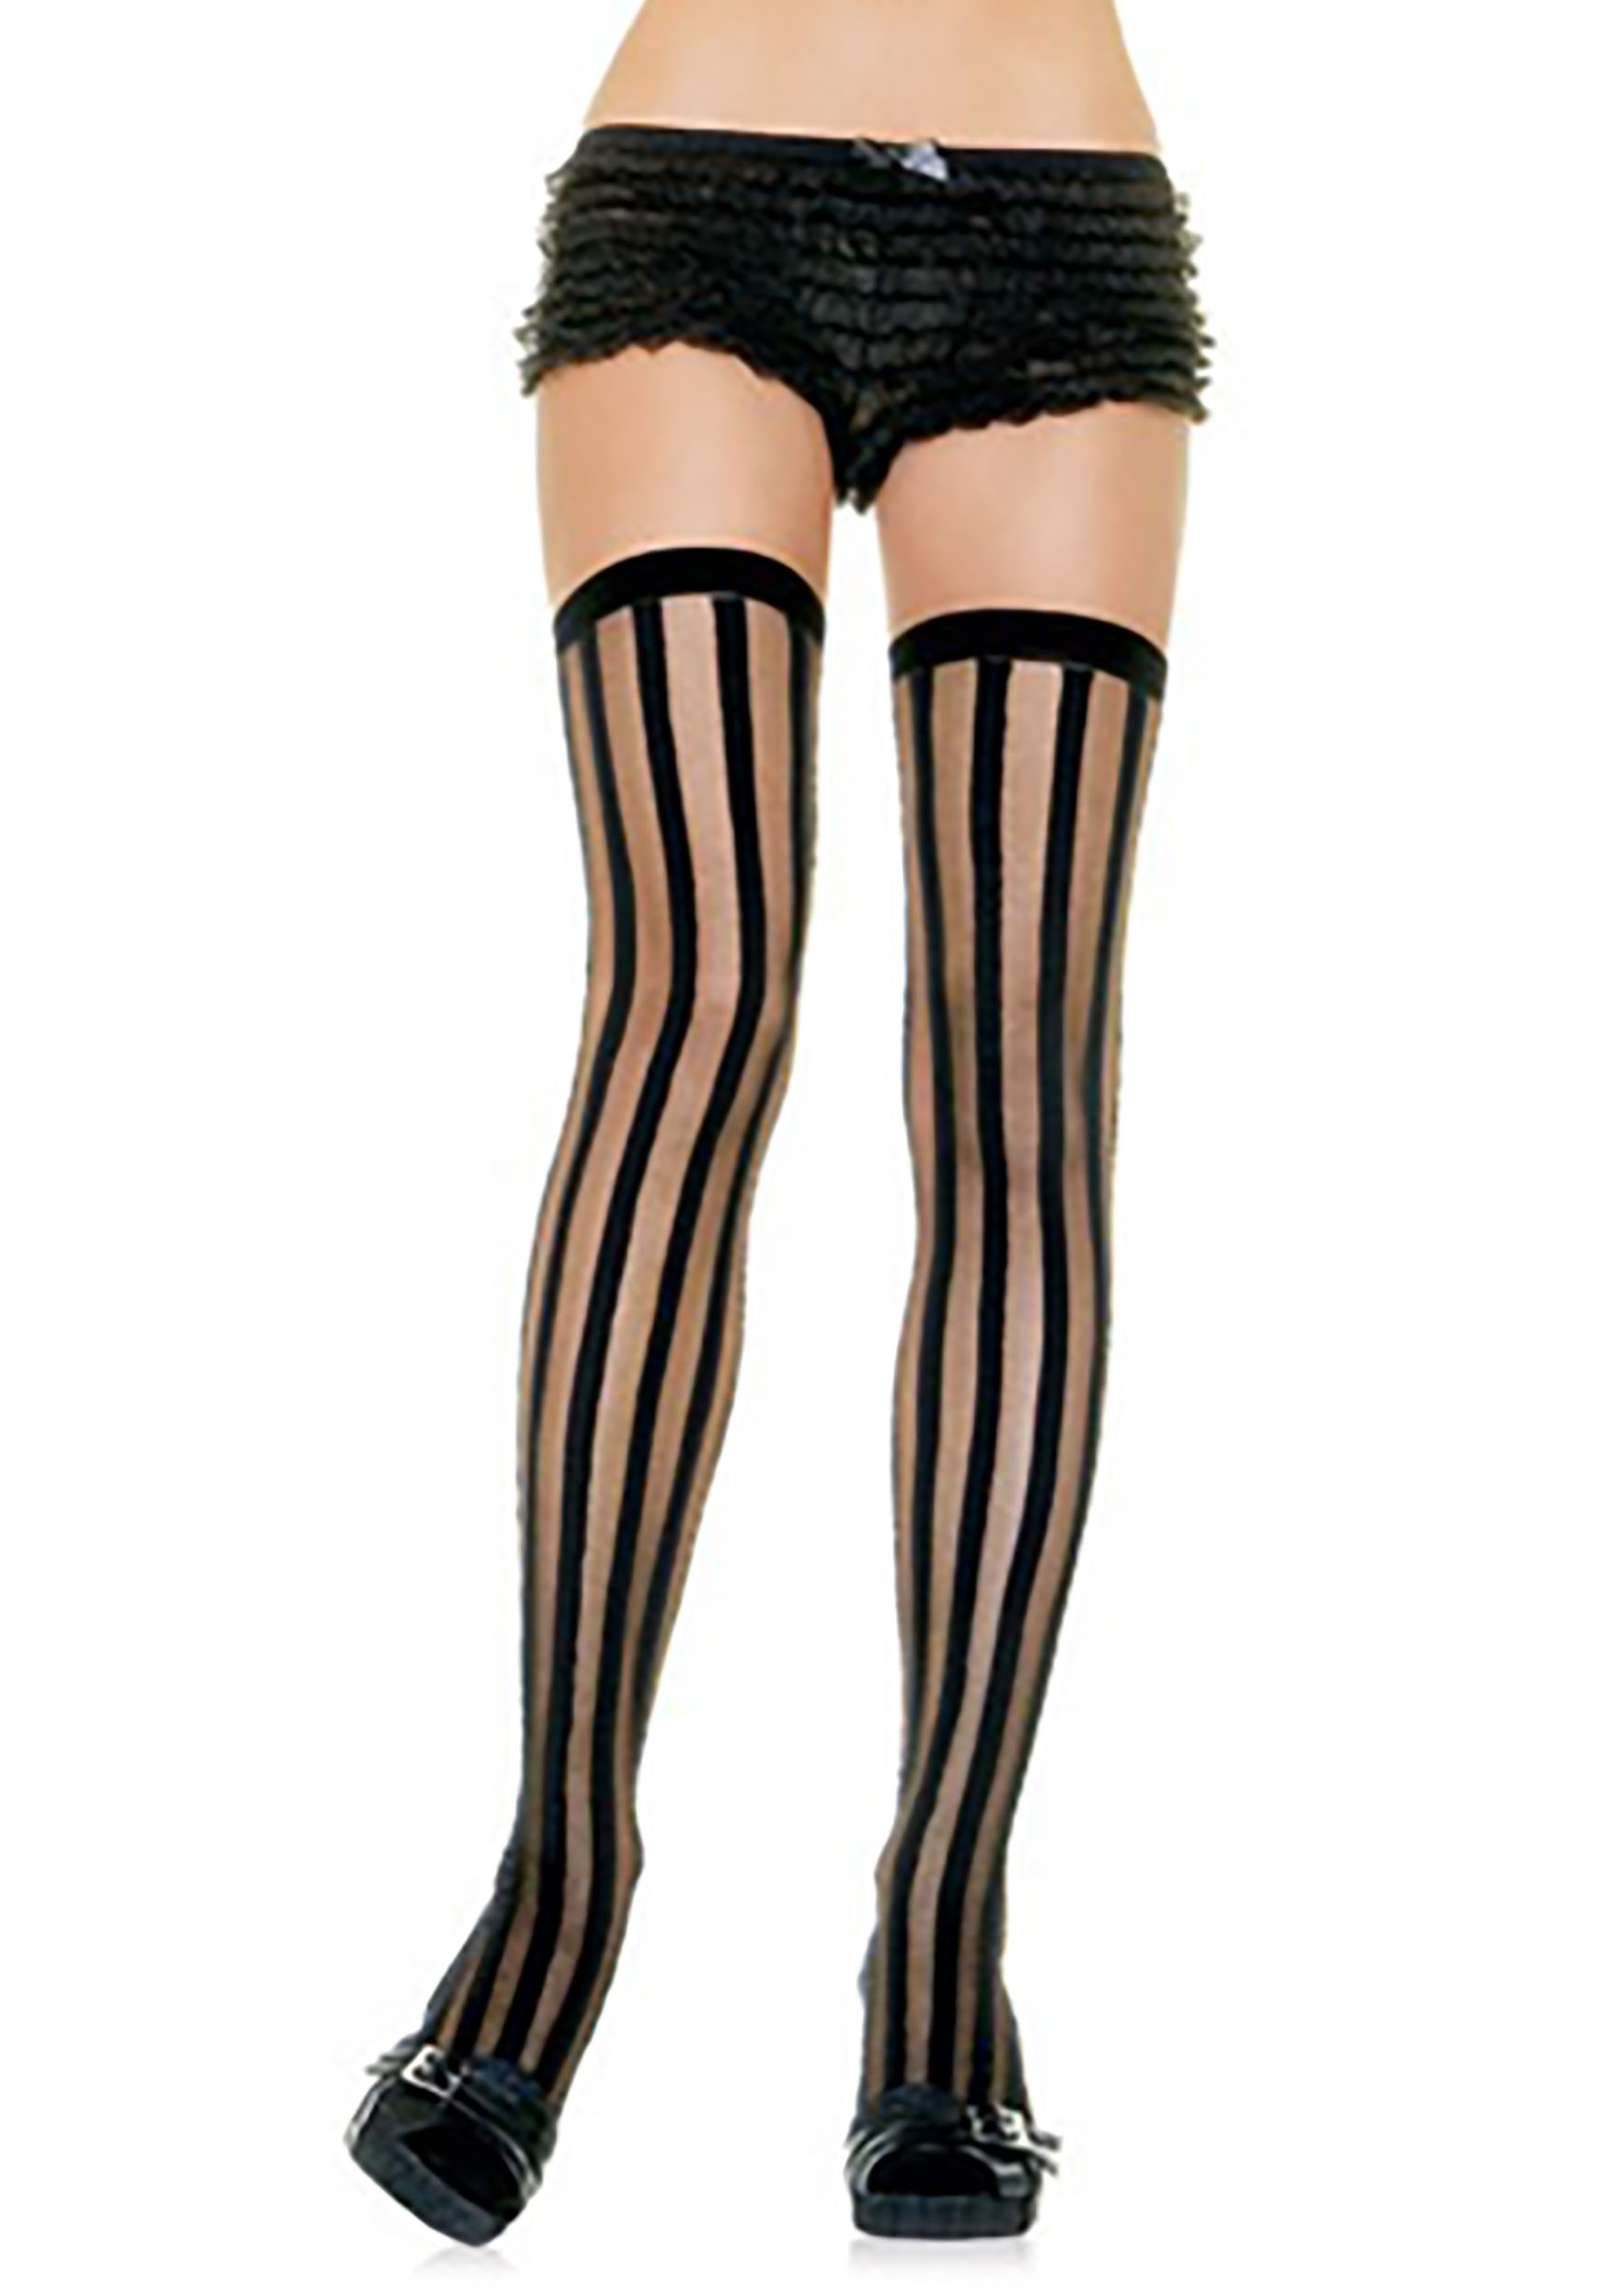 Black Striped Stockings for Women